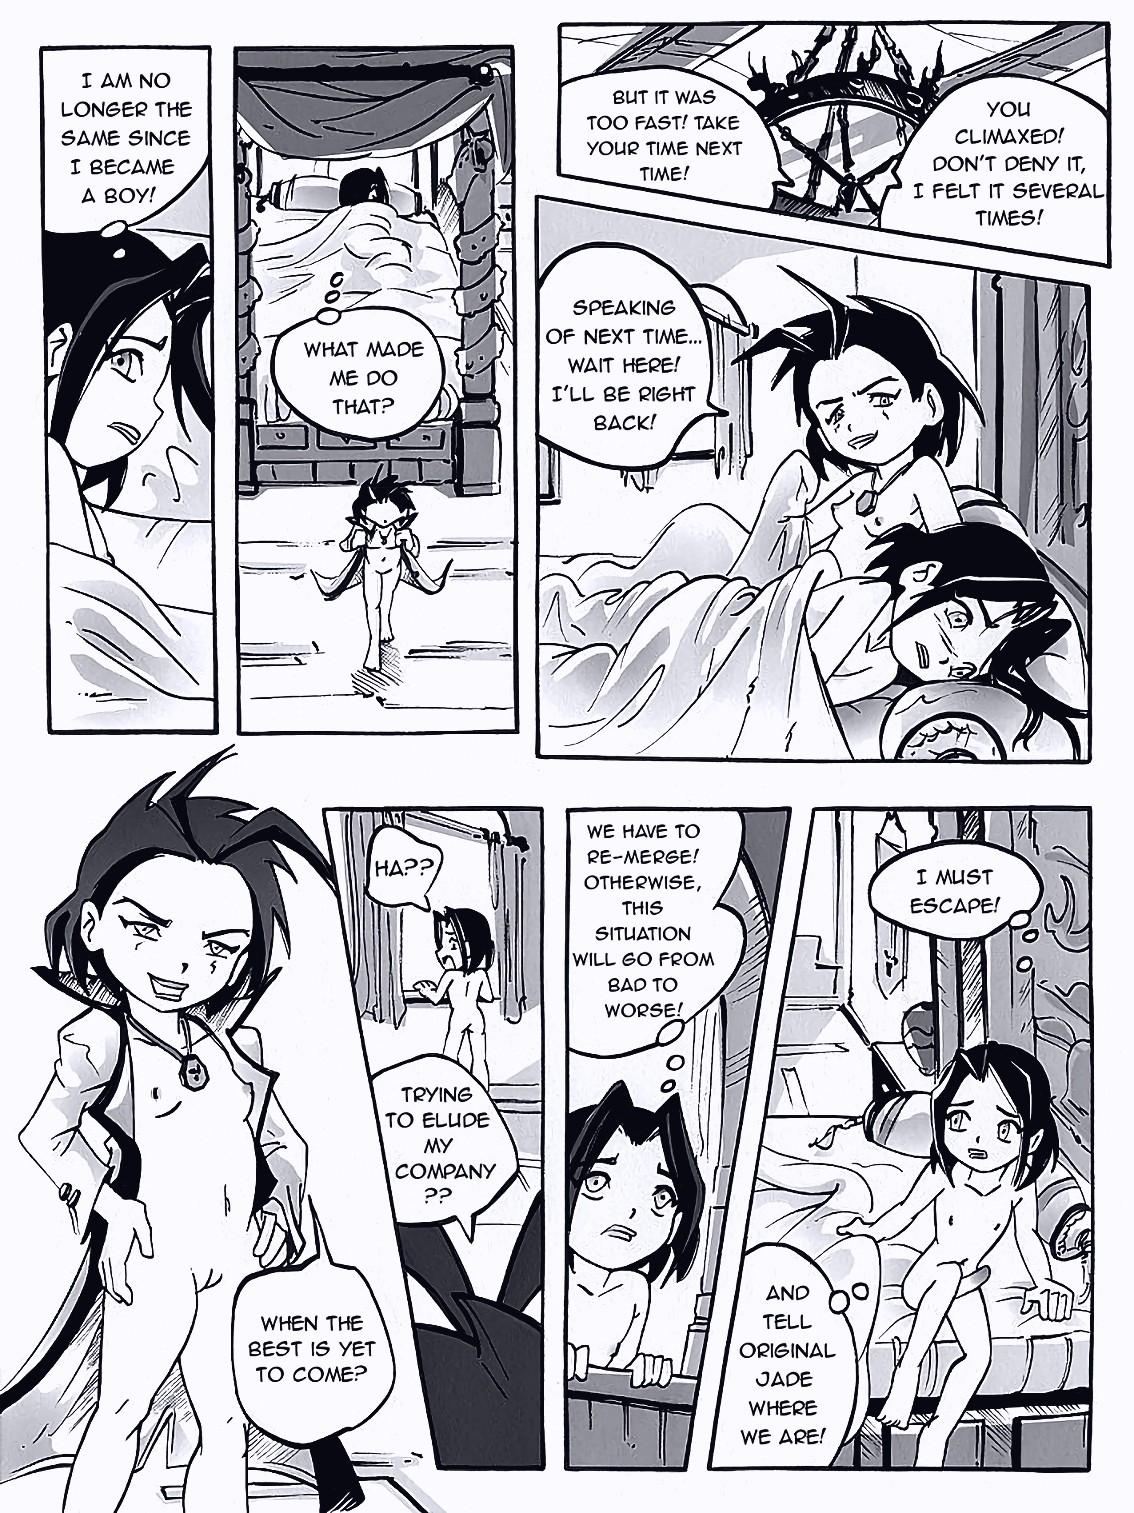 Jade Adventure porn comic page 065